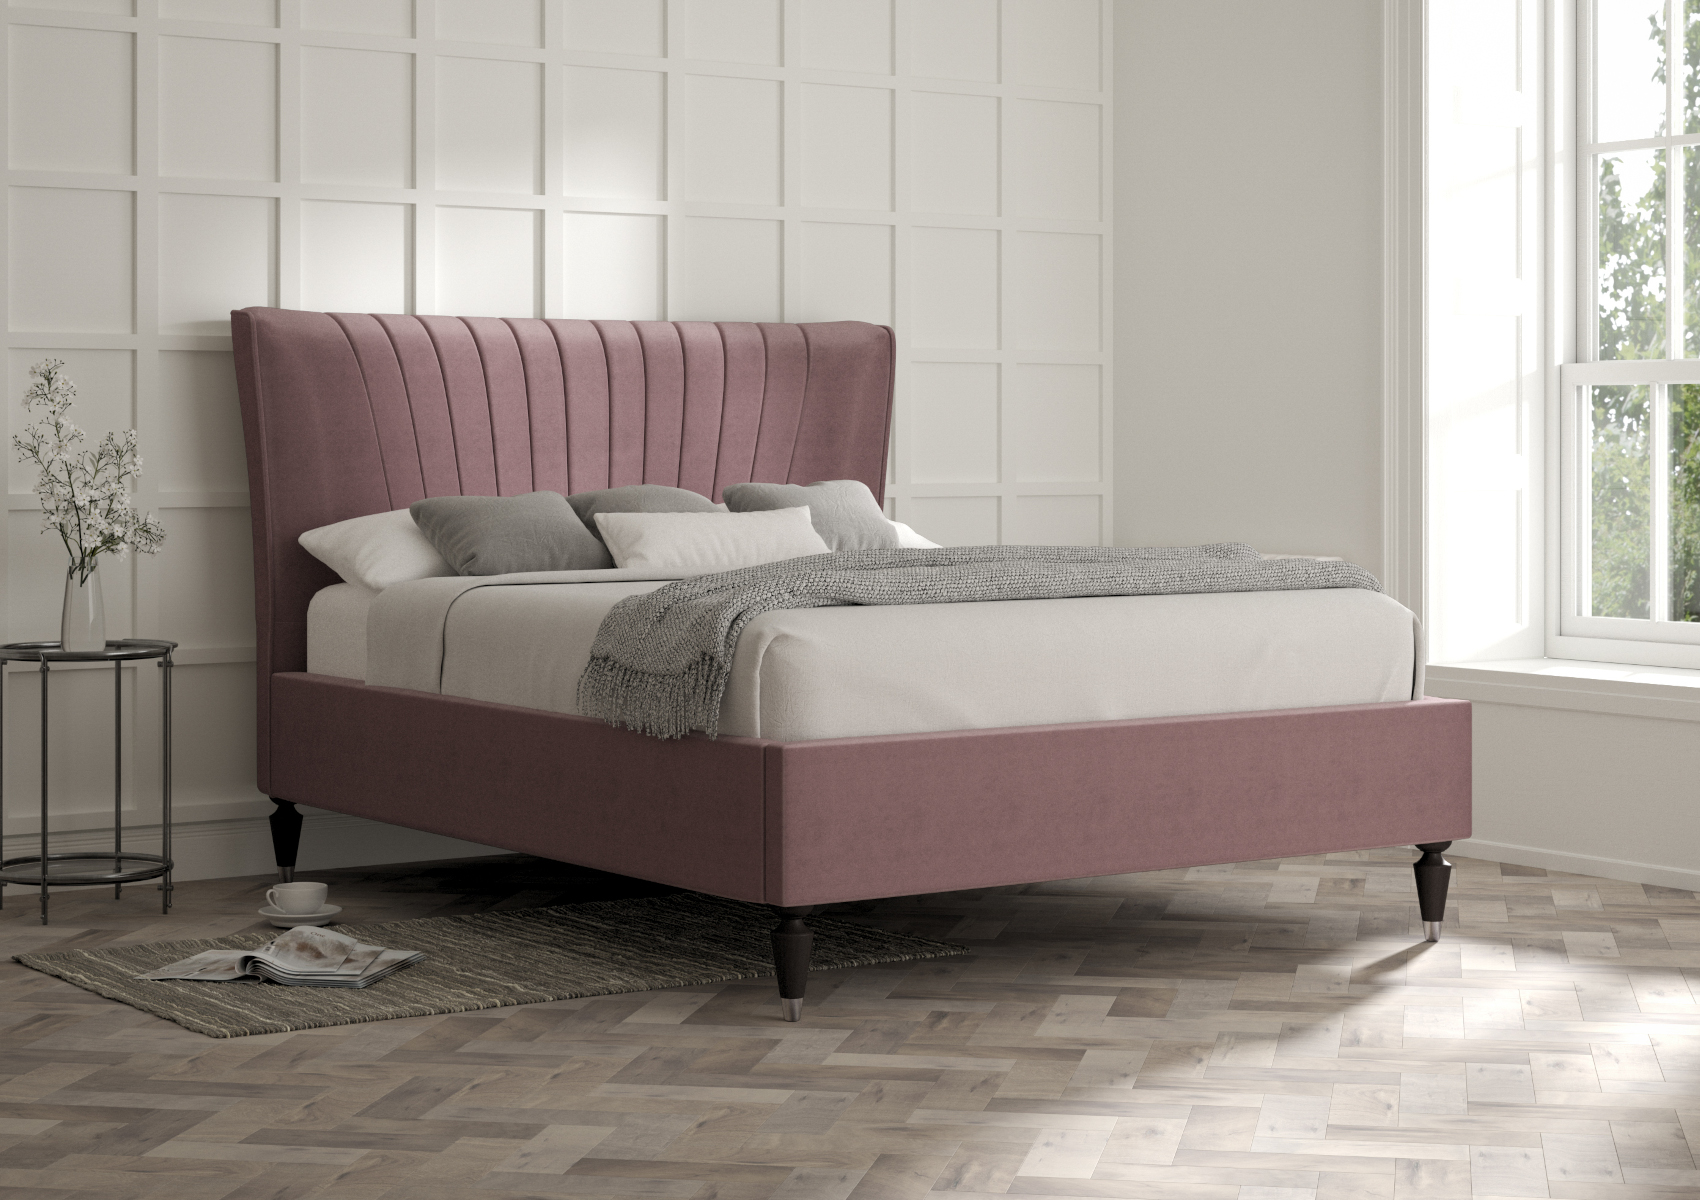 View Melbury Velvet Navy Upholstered Super King Bed Time4Sleep information